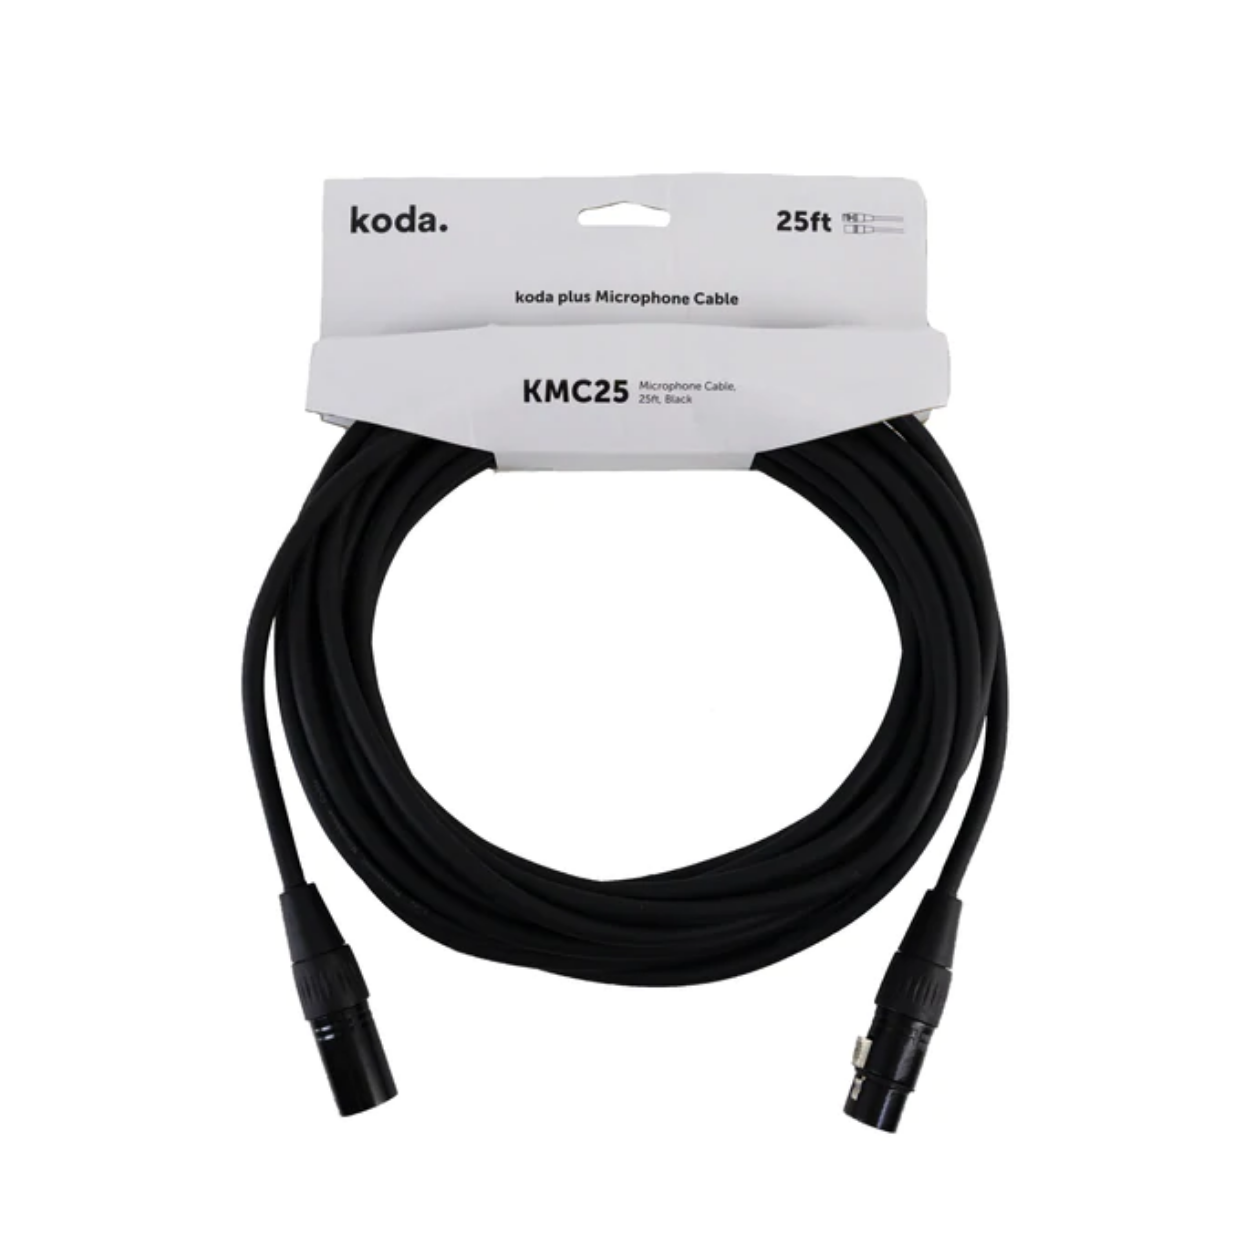 koda plus KMC25 Microphone Cable, 25ft, Black